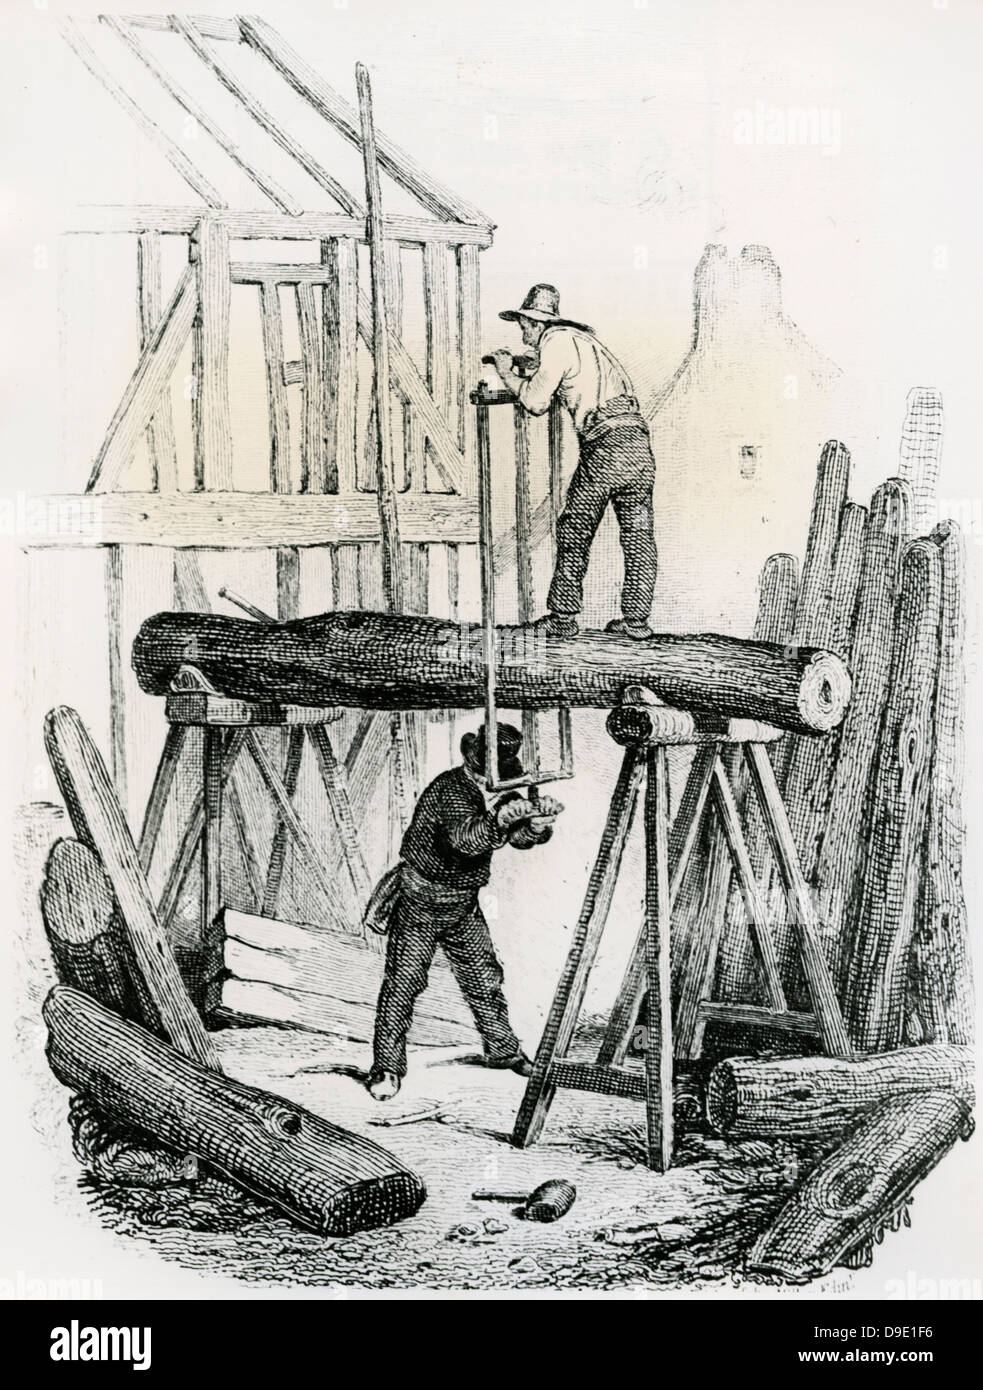 Baumstamm in Bretter Sägen. Gravur, London, 1837 Stockfotografie - Alamy